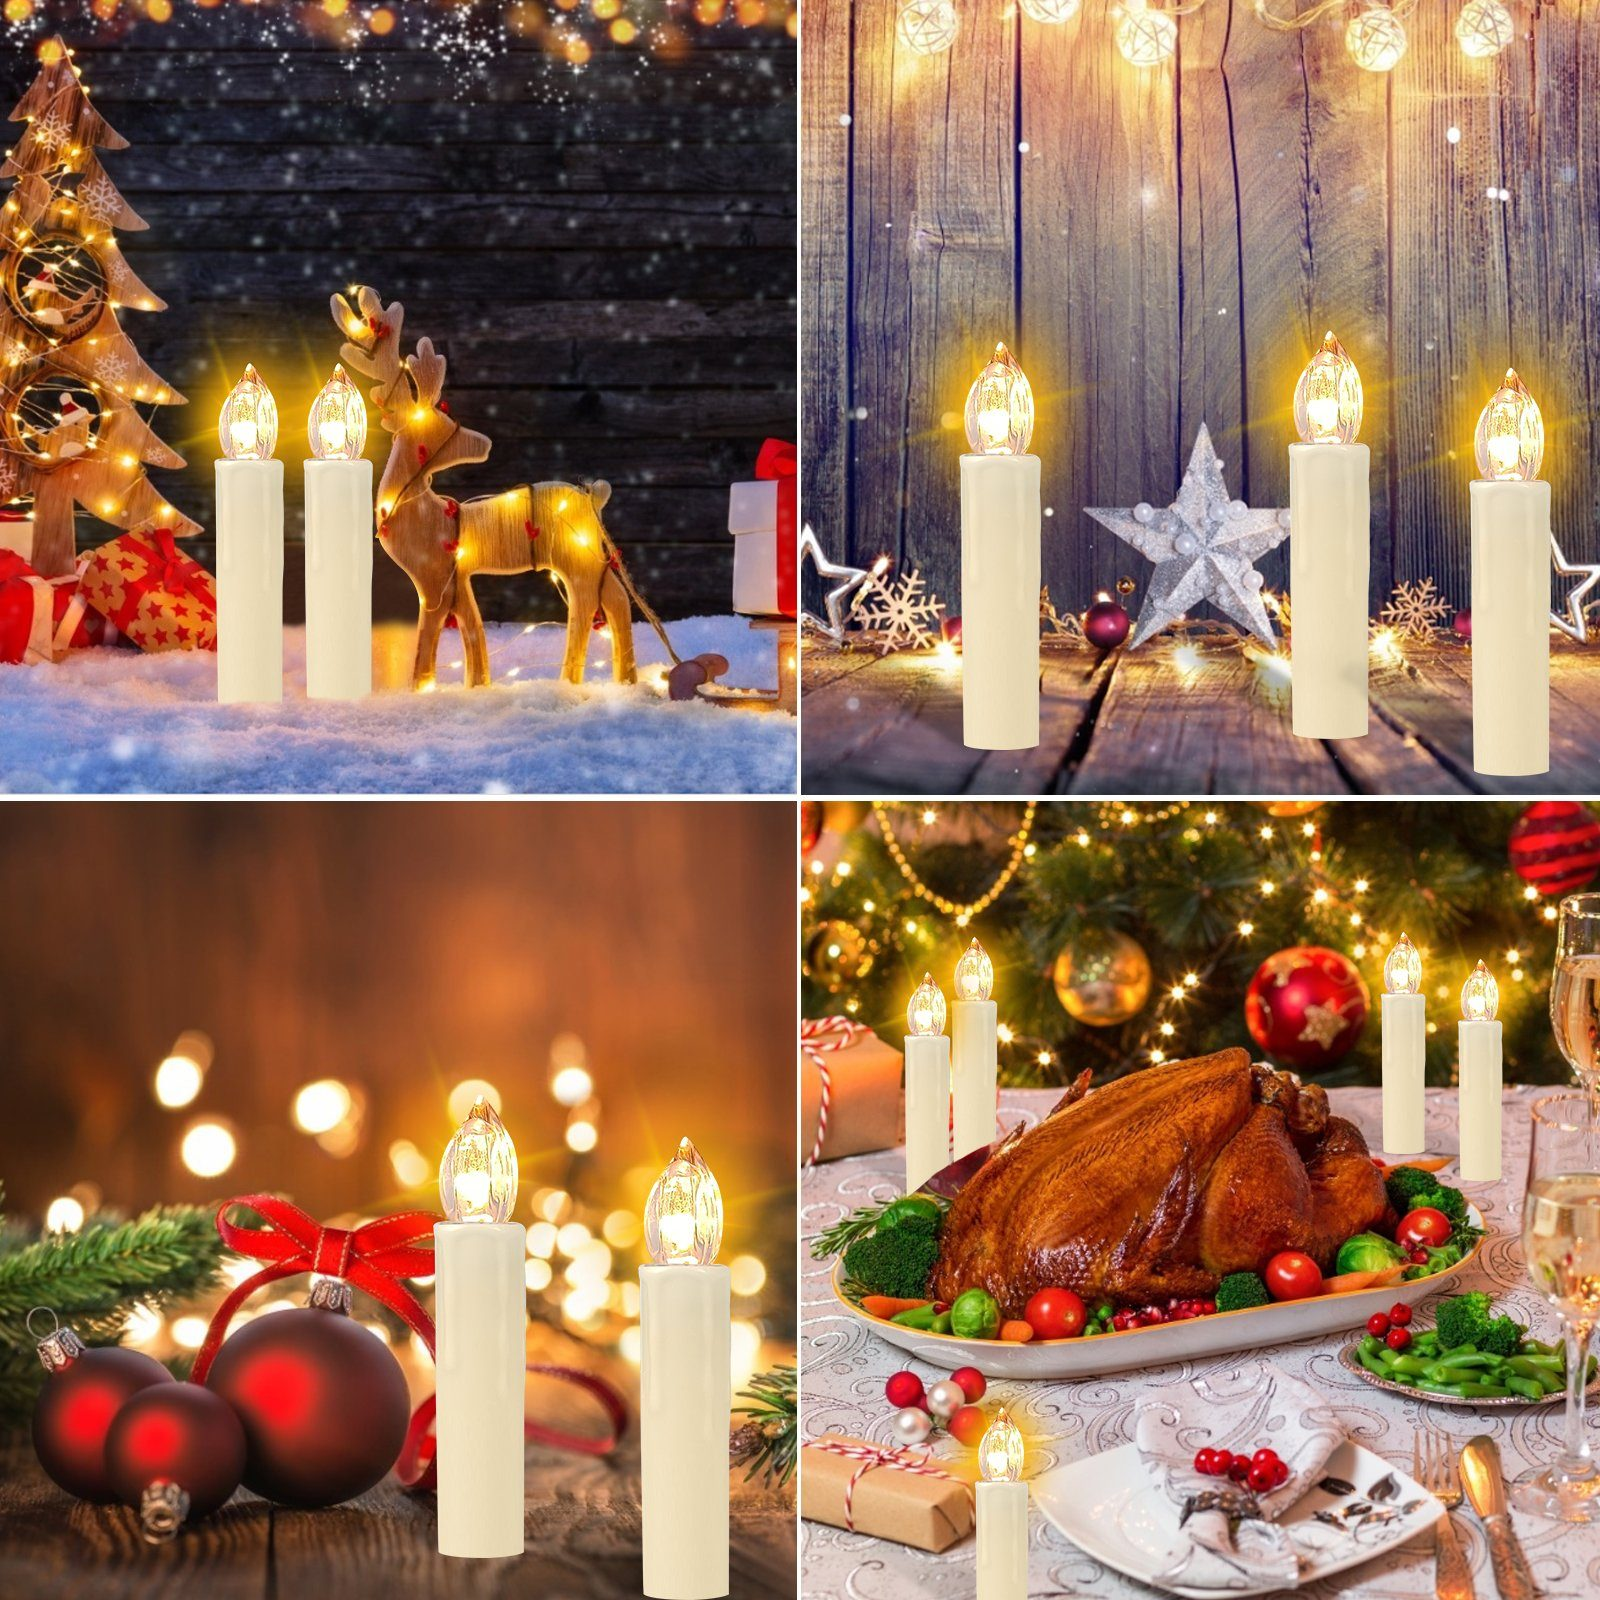 Creme LED-Kerze 10 Weihnachtskerzen, Beige CH010-B LED GOTOLL kabellose